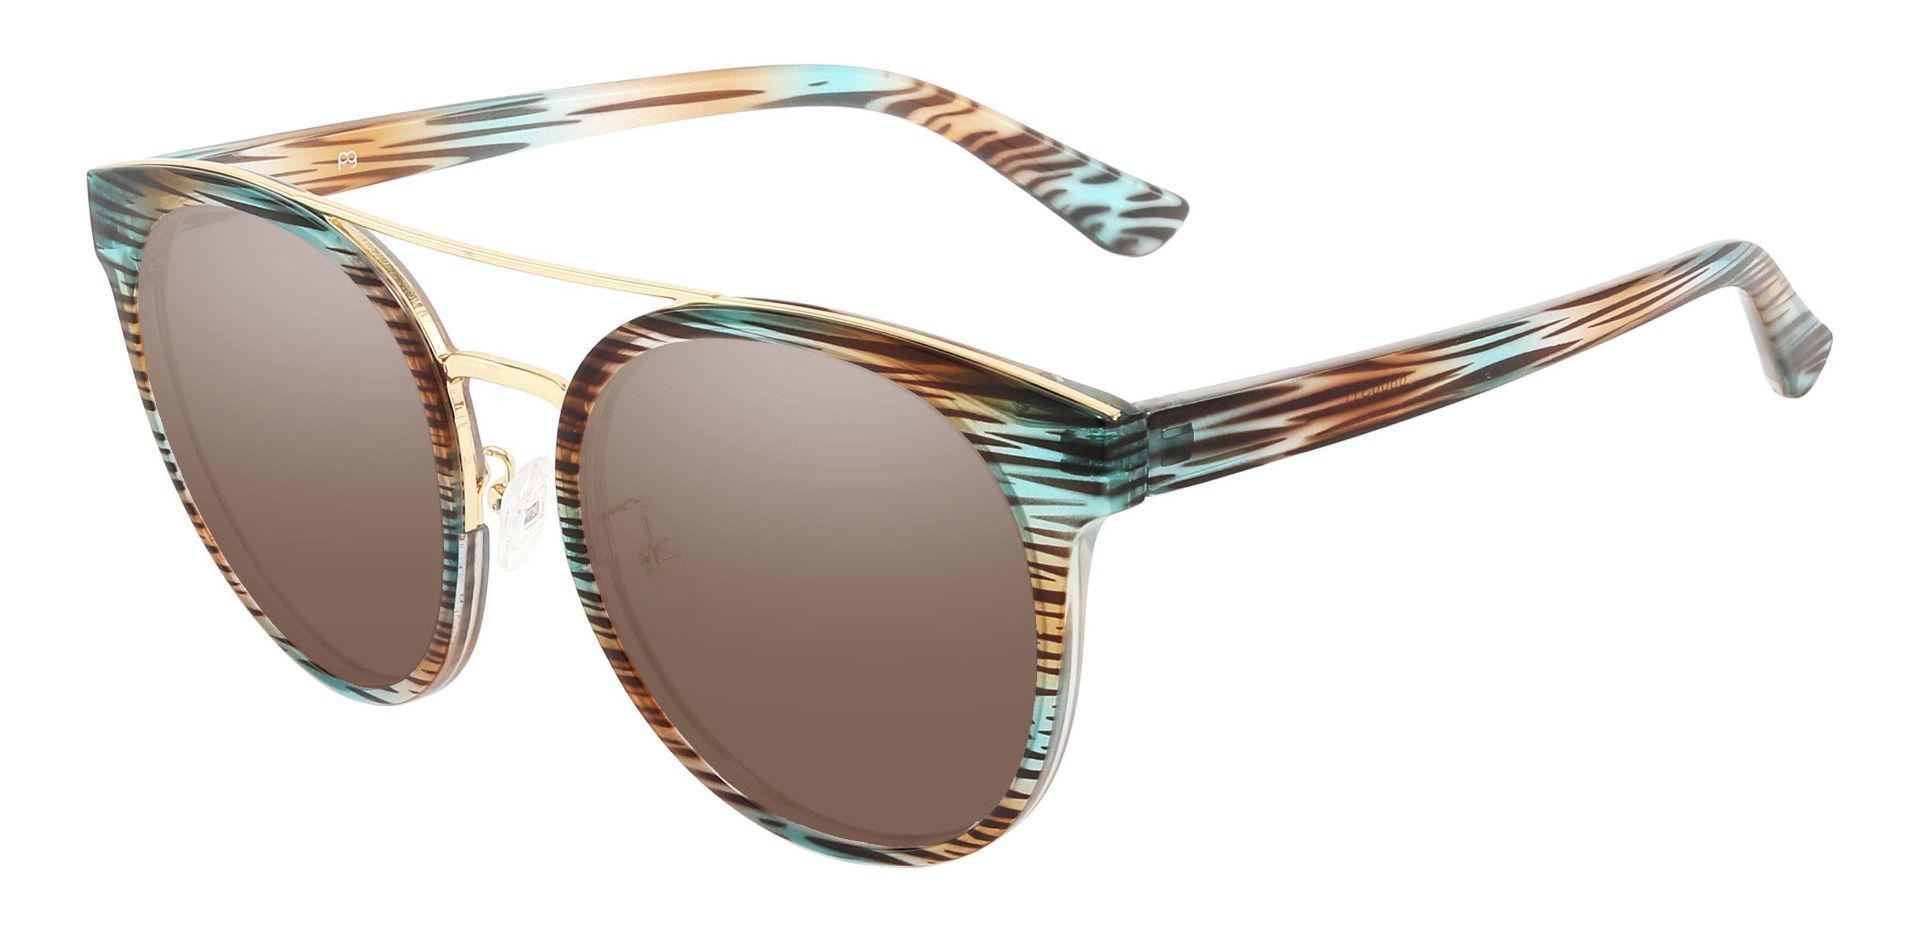 Oasis Aviator Prescription Sunglasses - Striped Frame With Brown Lenses